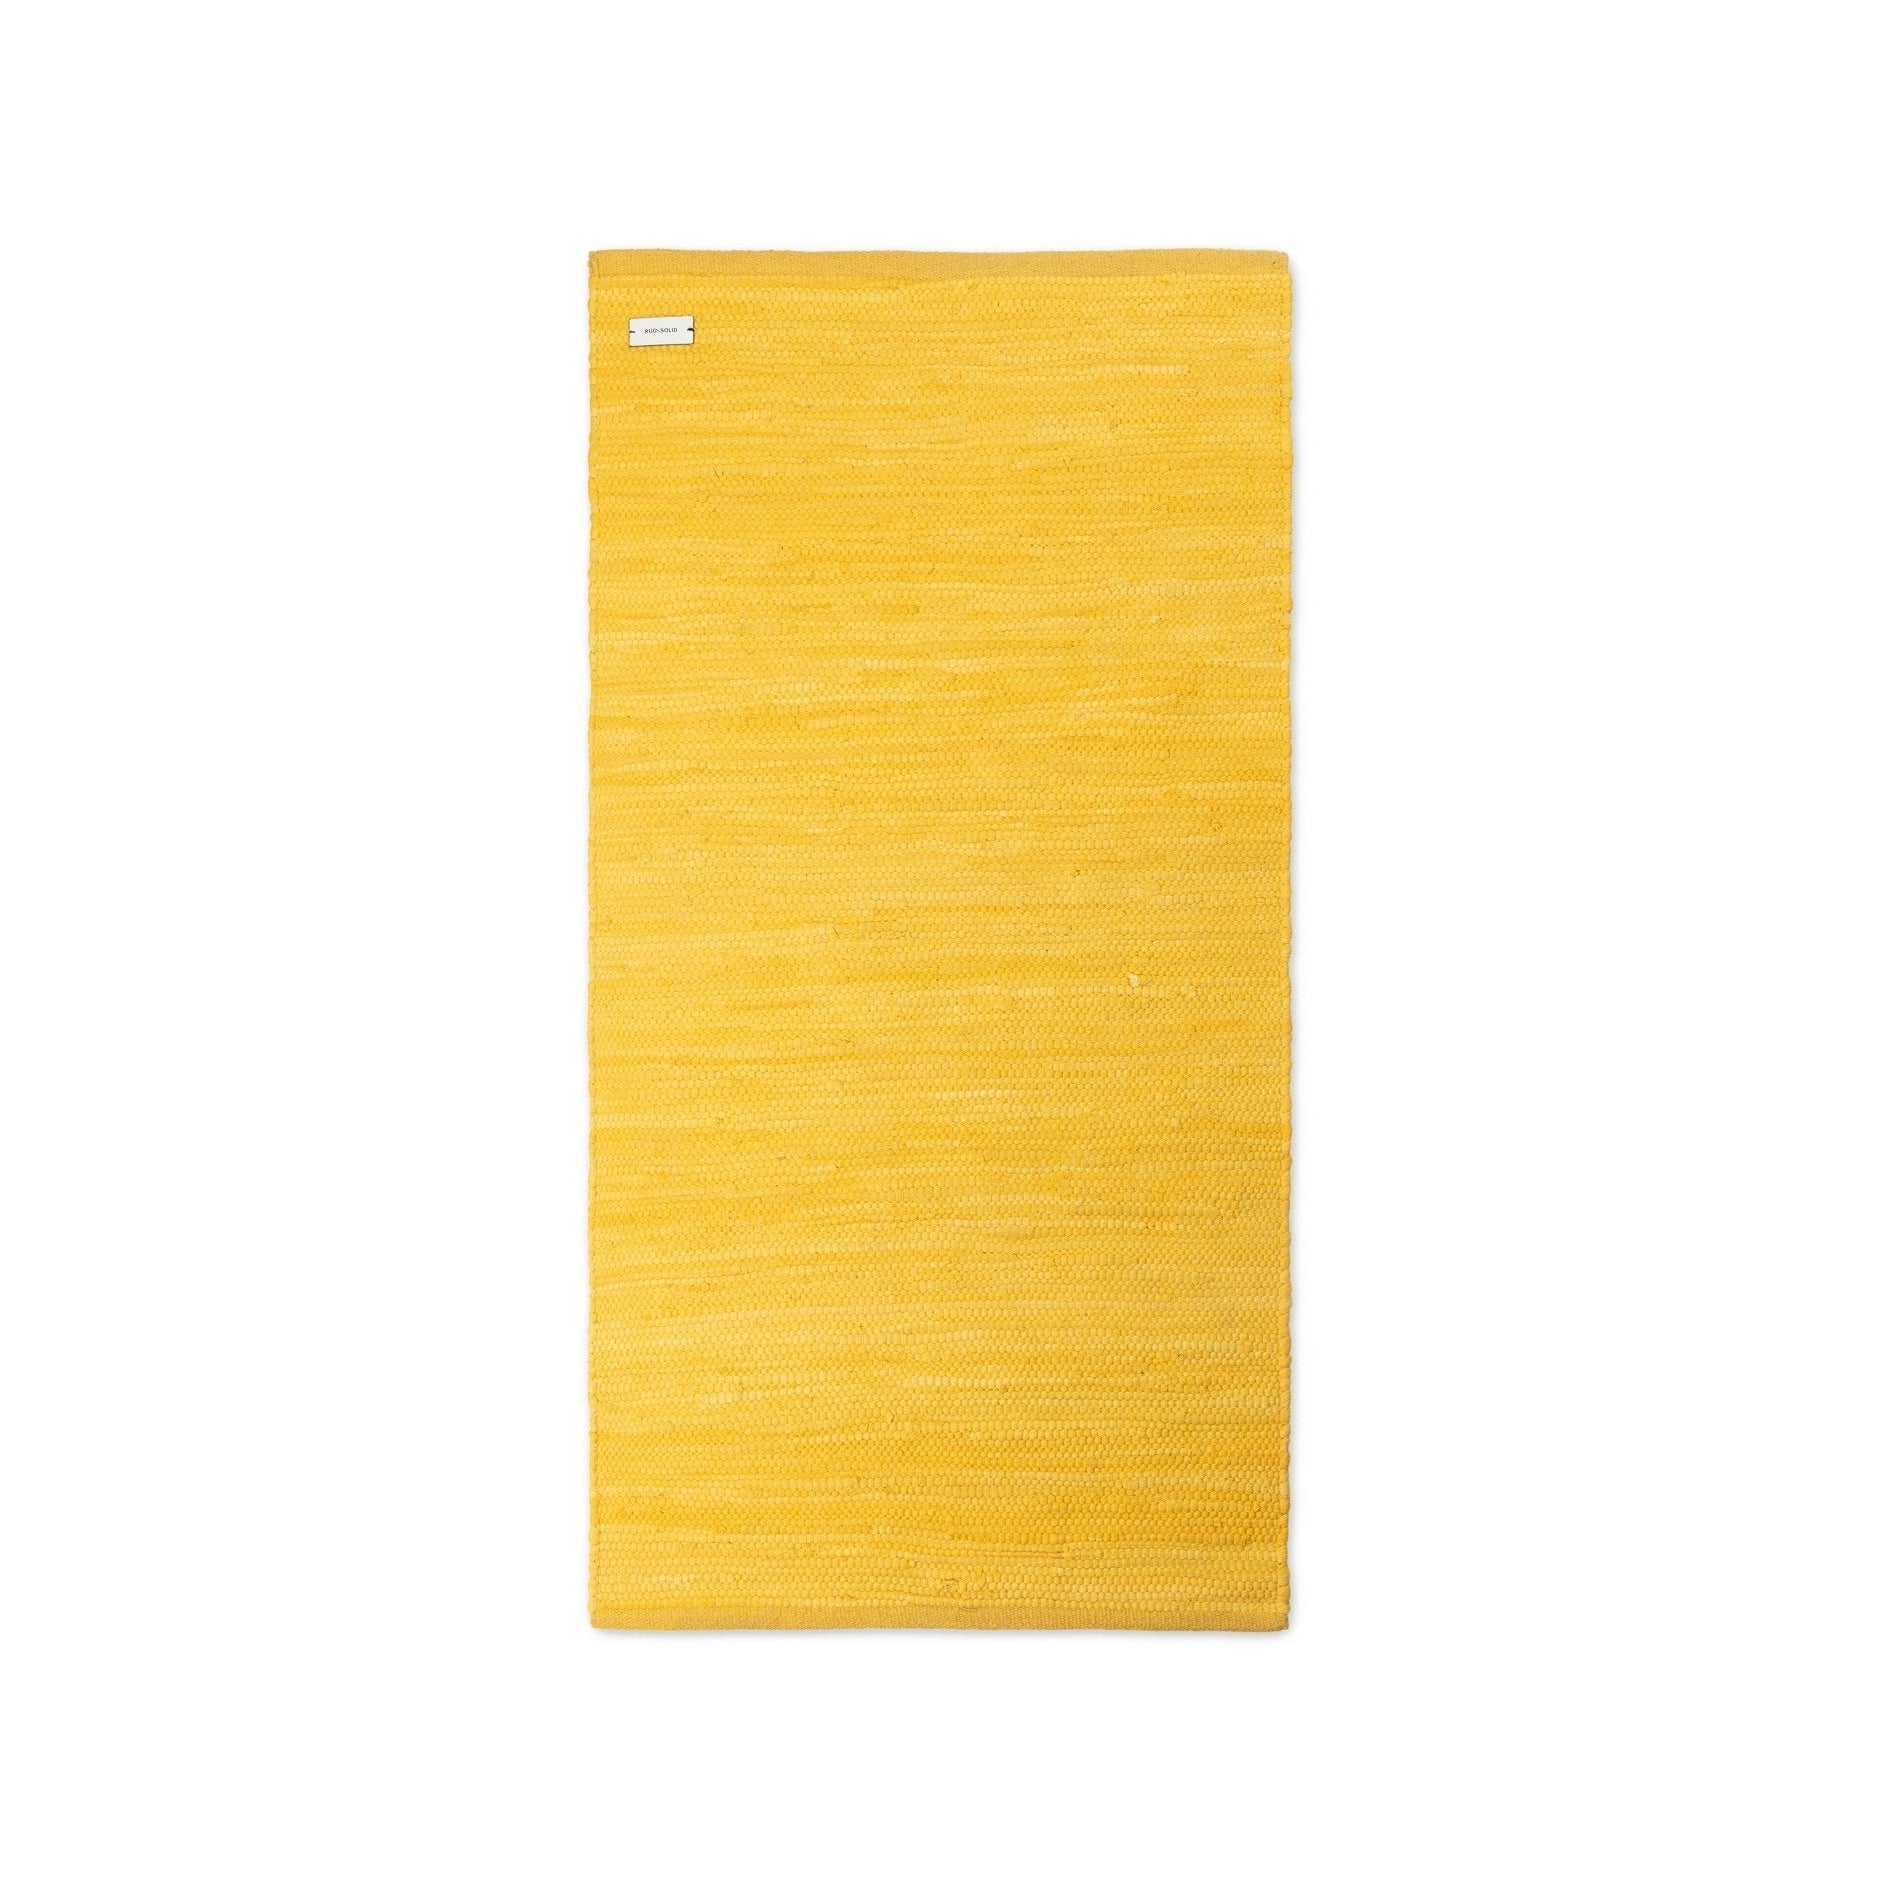 Rug Solid Bomullsmatta regnrock gul, 60 x 90 cm